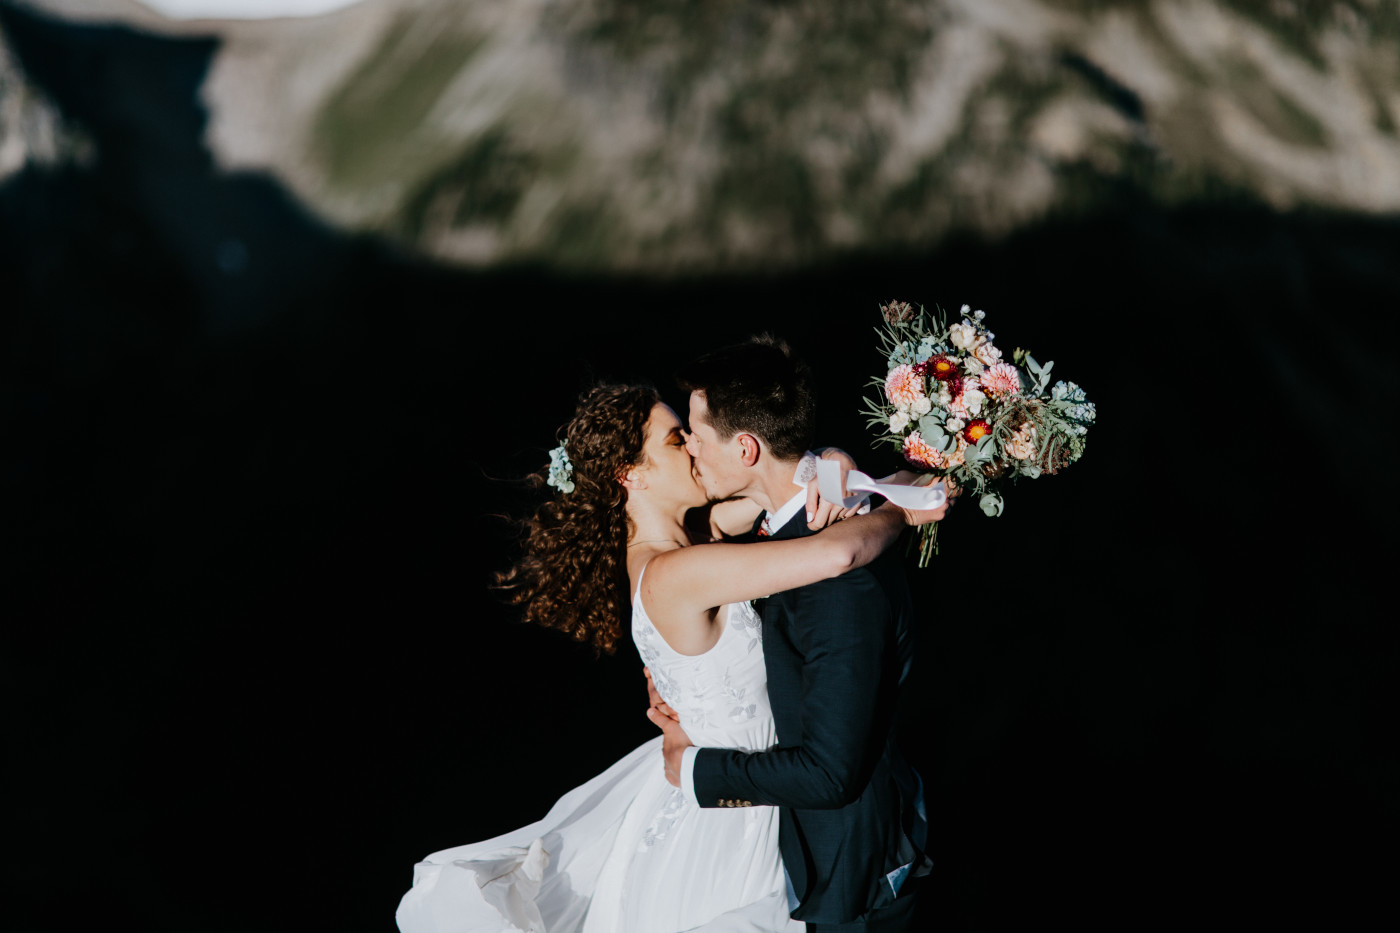 Tasha and Chad kiss. Elopement photography at Mount Rainier by Sienna Plus Josh.